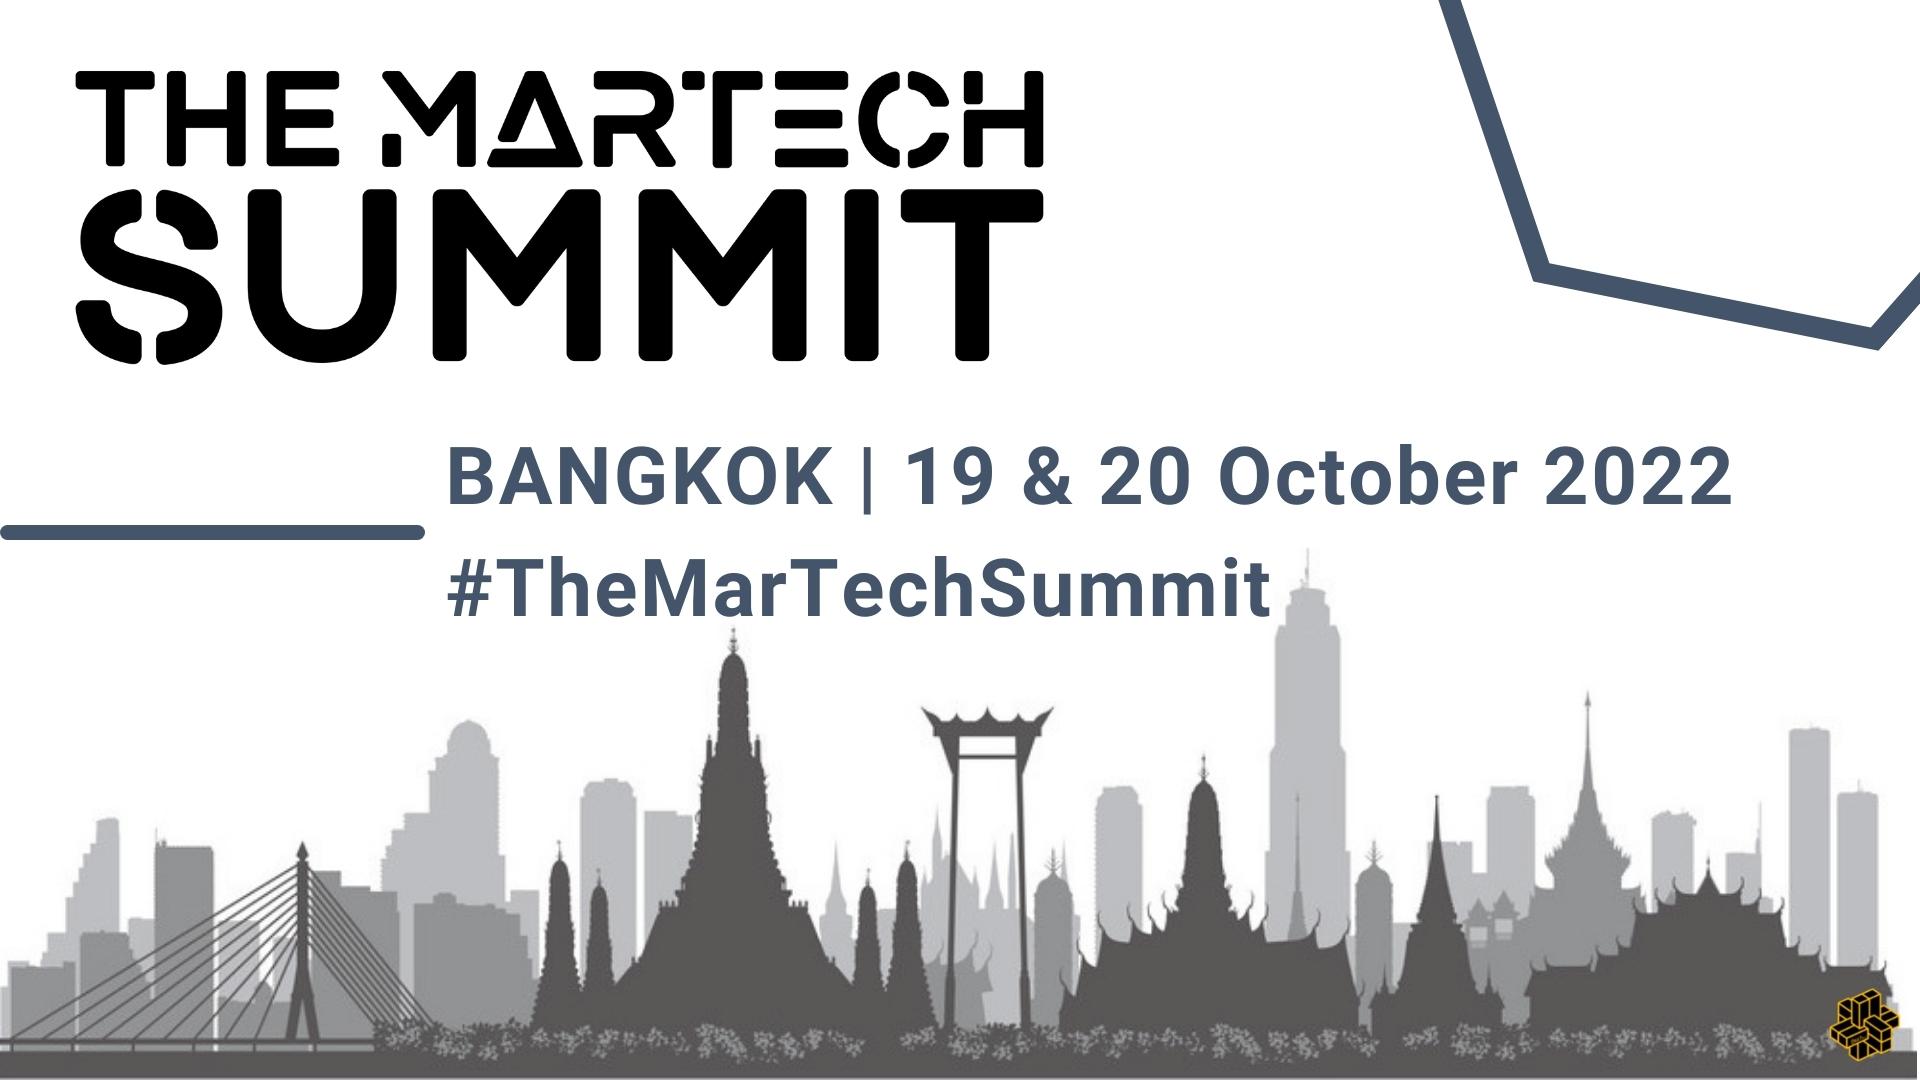 The MarTech Summit Bangkok organized by BEETc